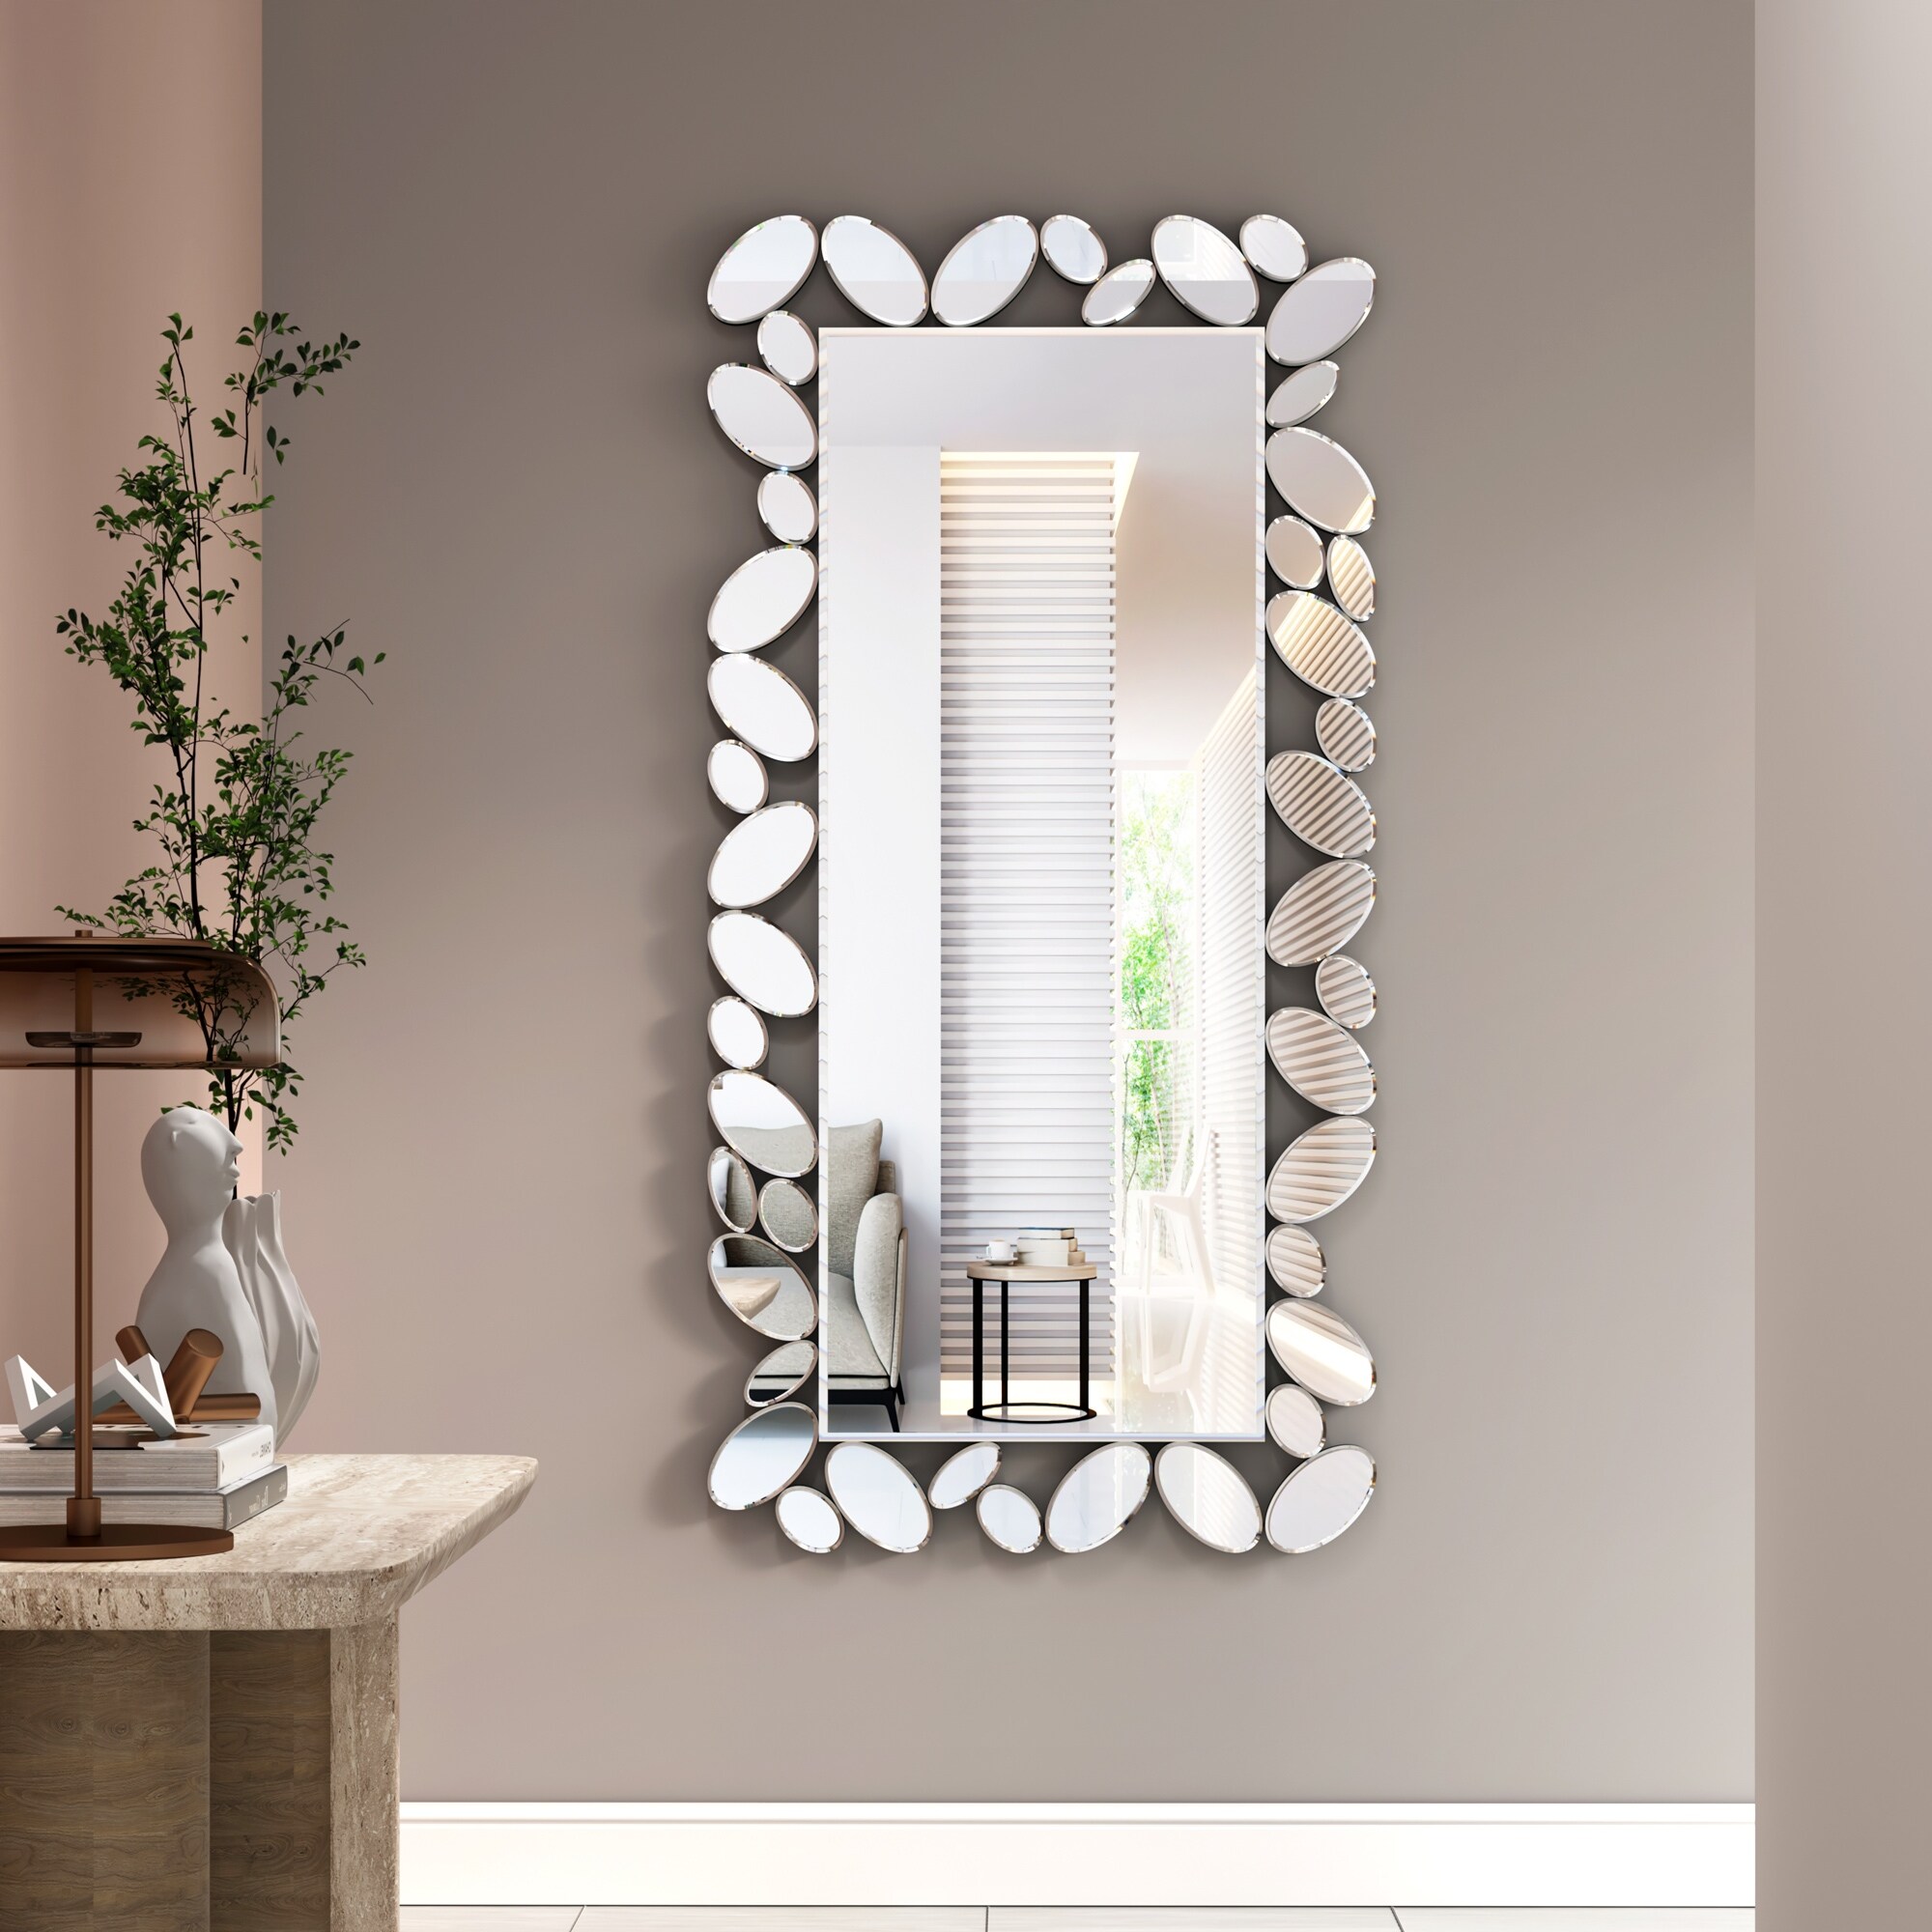 KOHROS 24 in. x 35 in. Rectangle Modern Decoration Wall Mirror